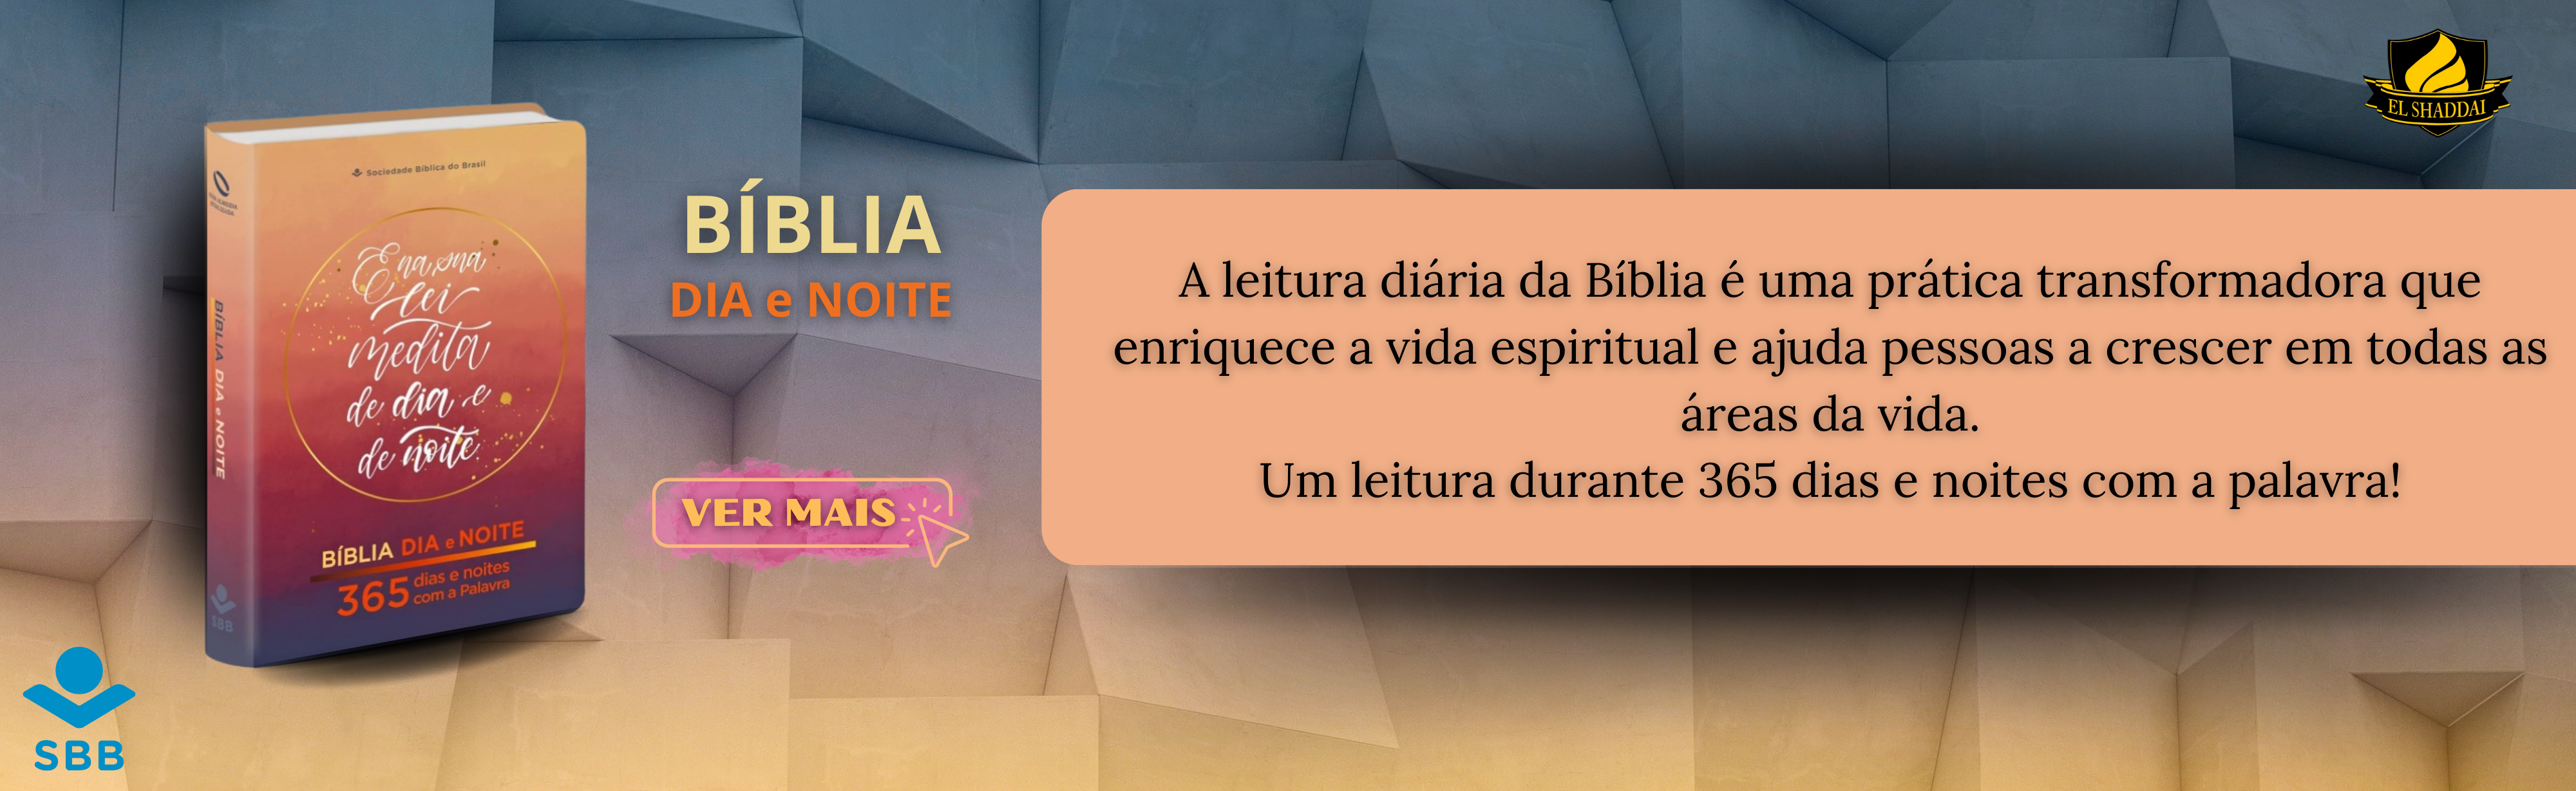 banner desktop biblia 365